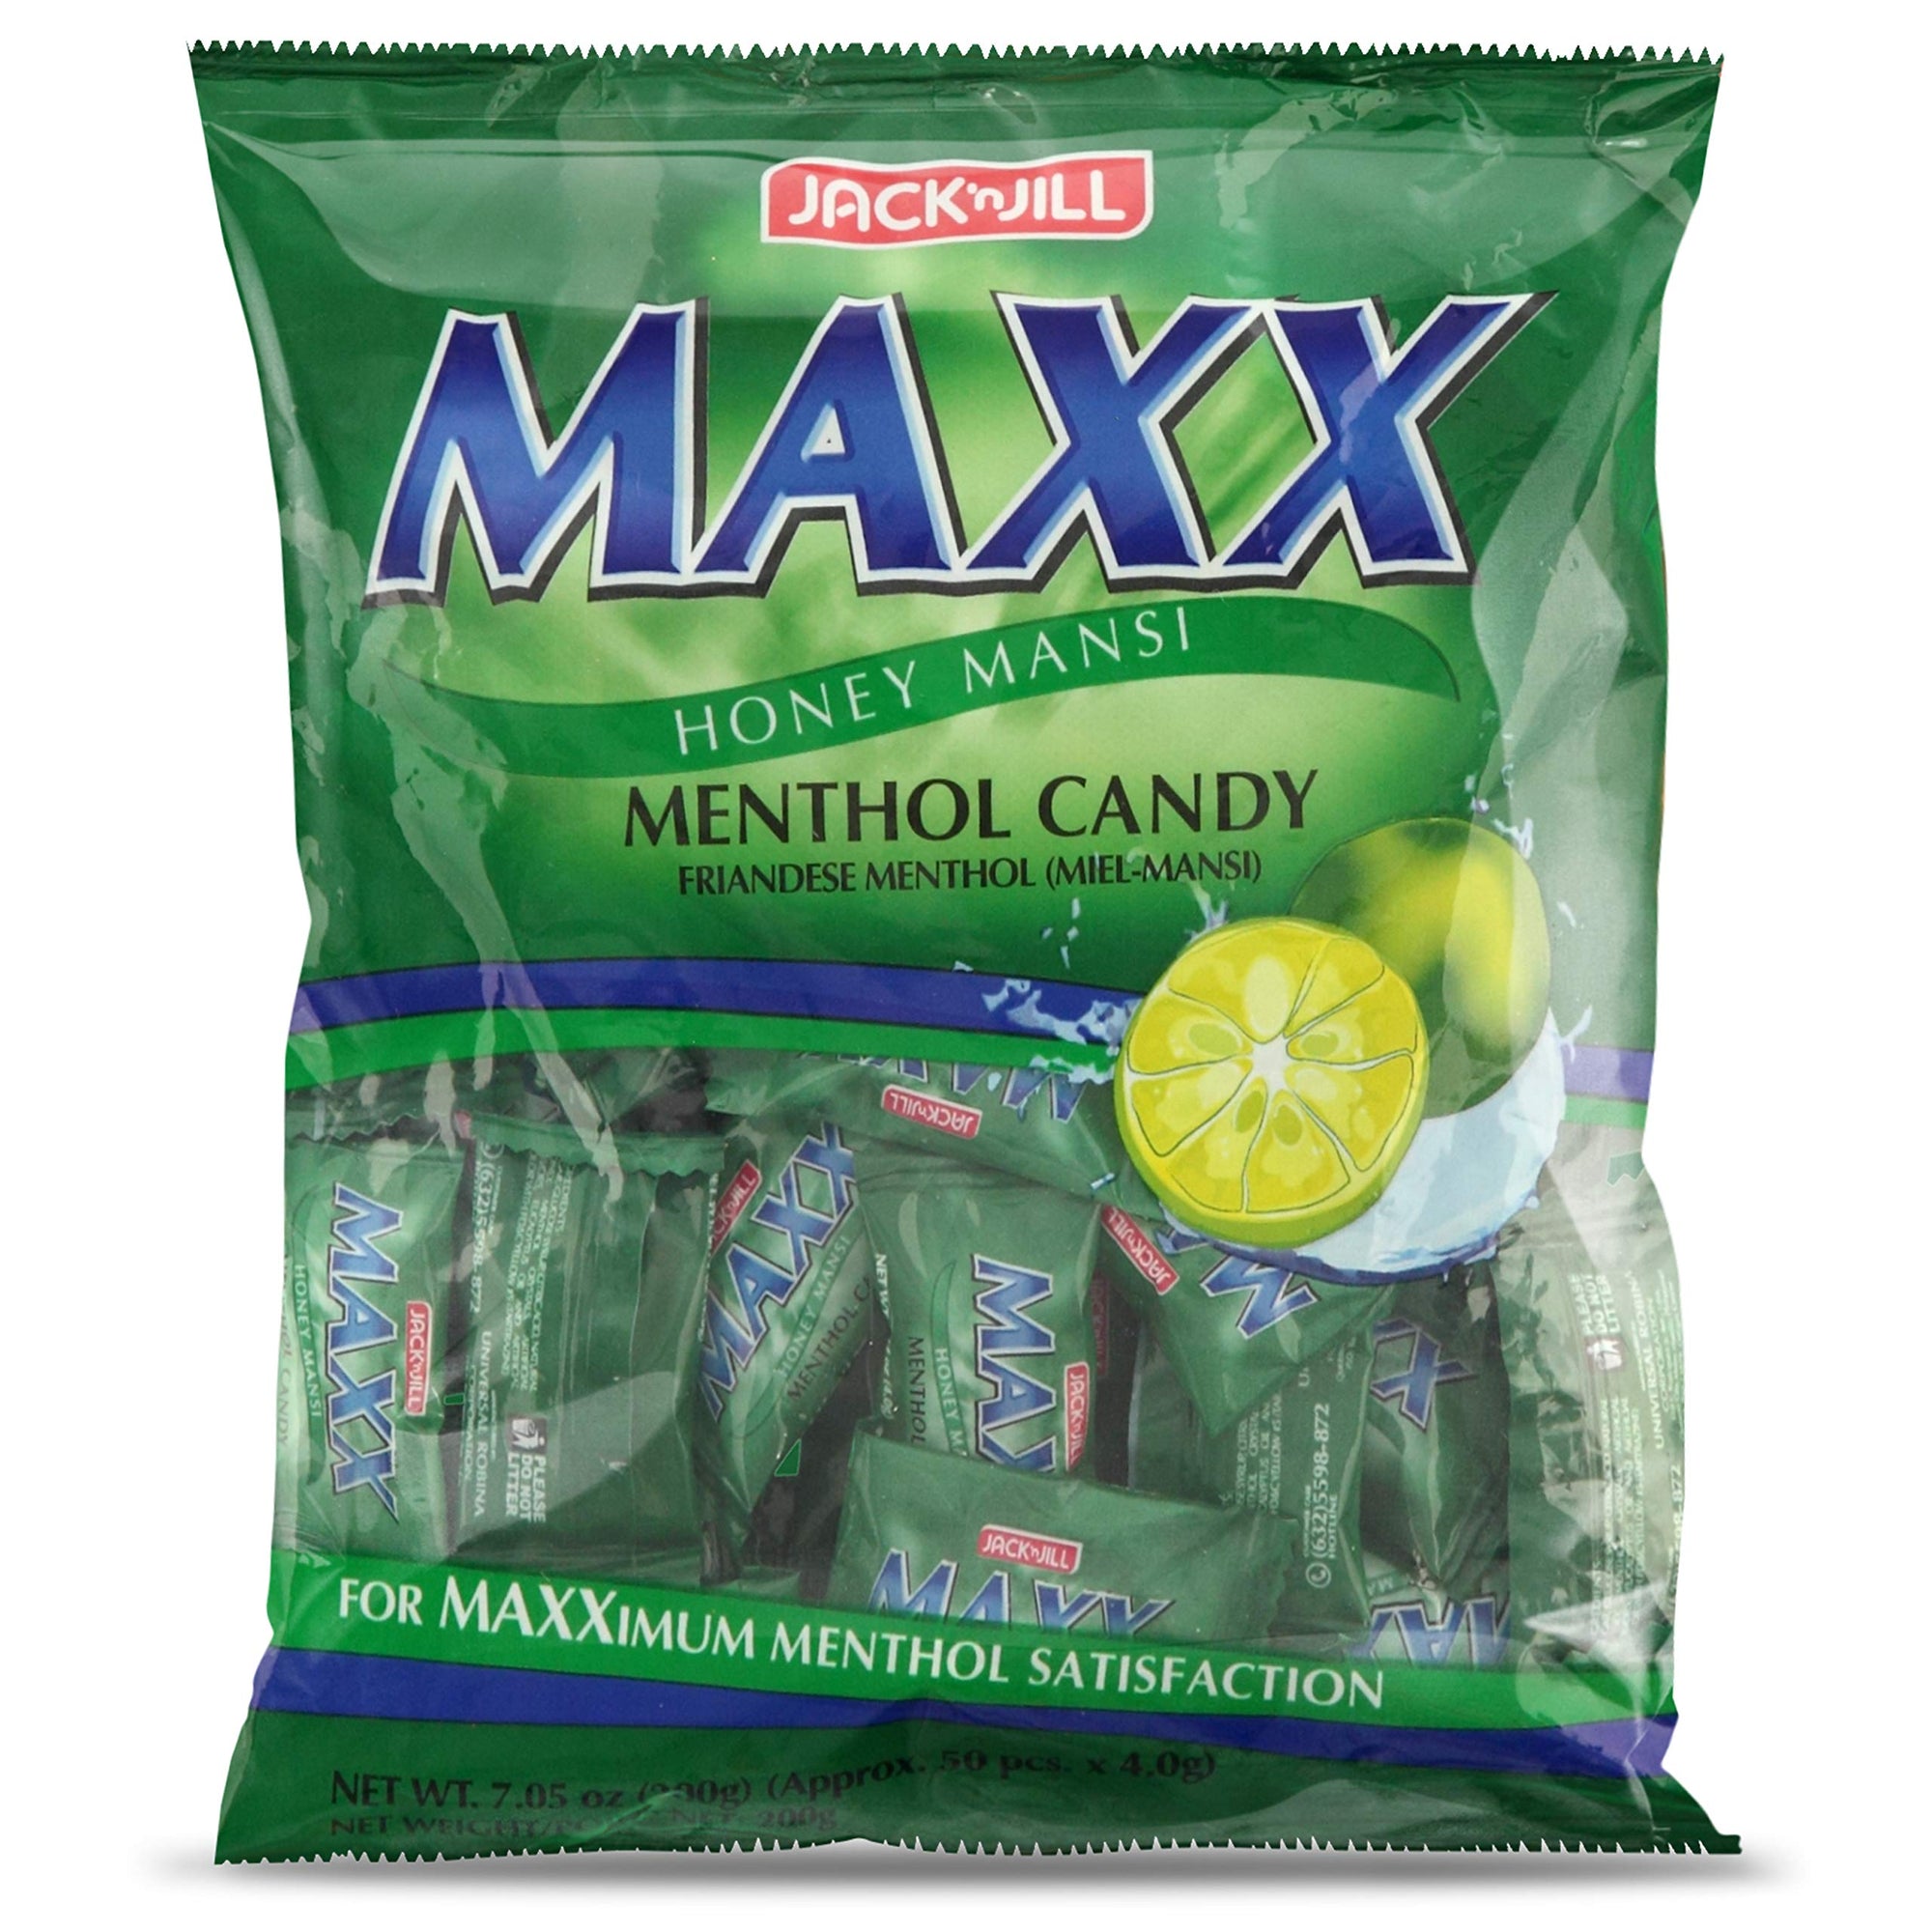 Jack'n Jill - Maxx Honey Mansi Menthol Candy Pack of 2 Net Wt 14.10 Oz